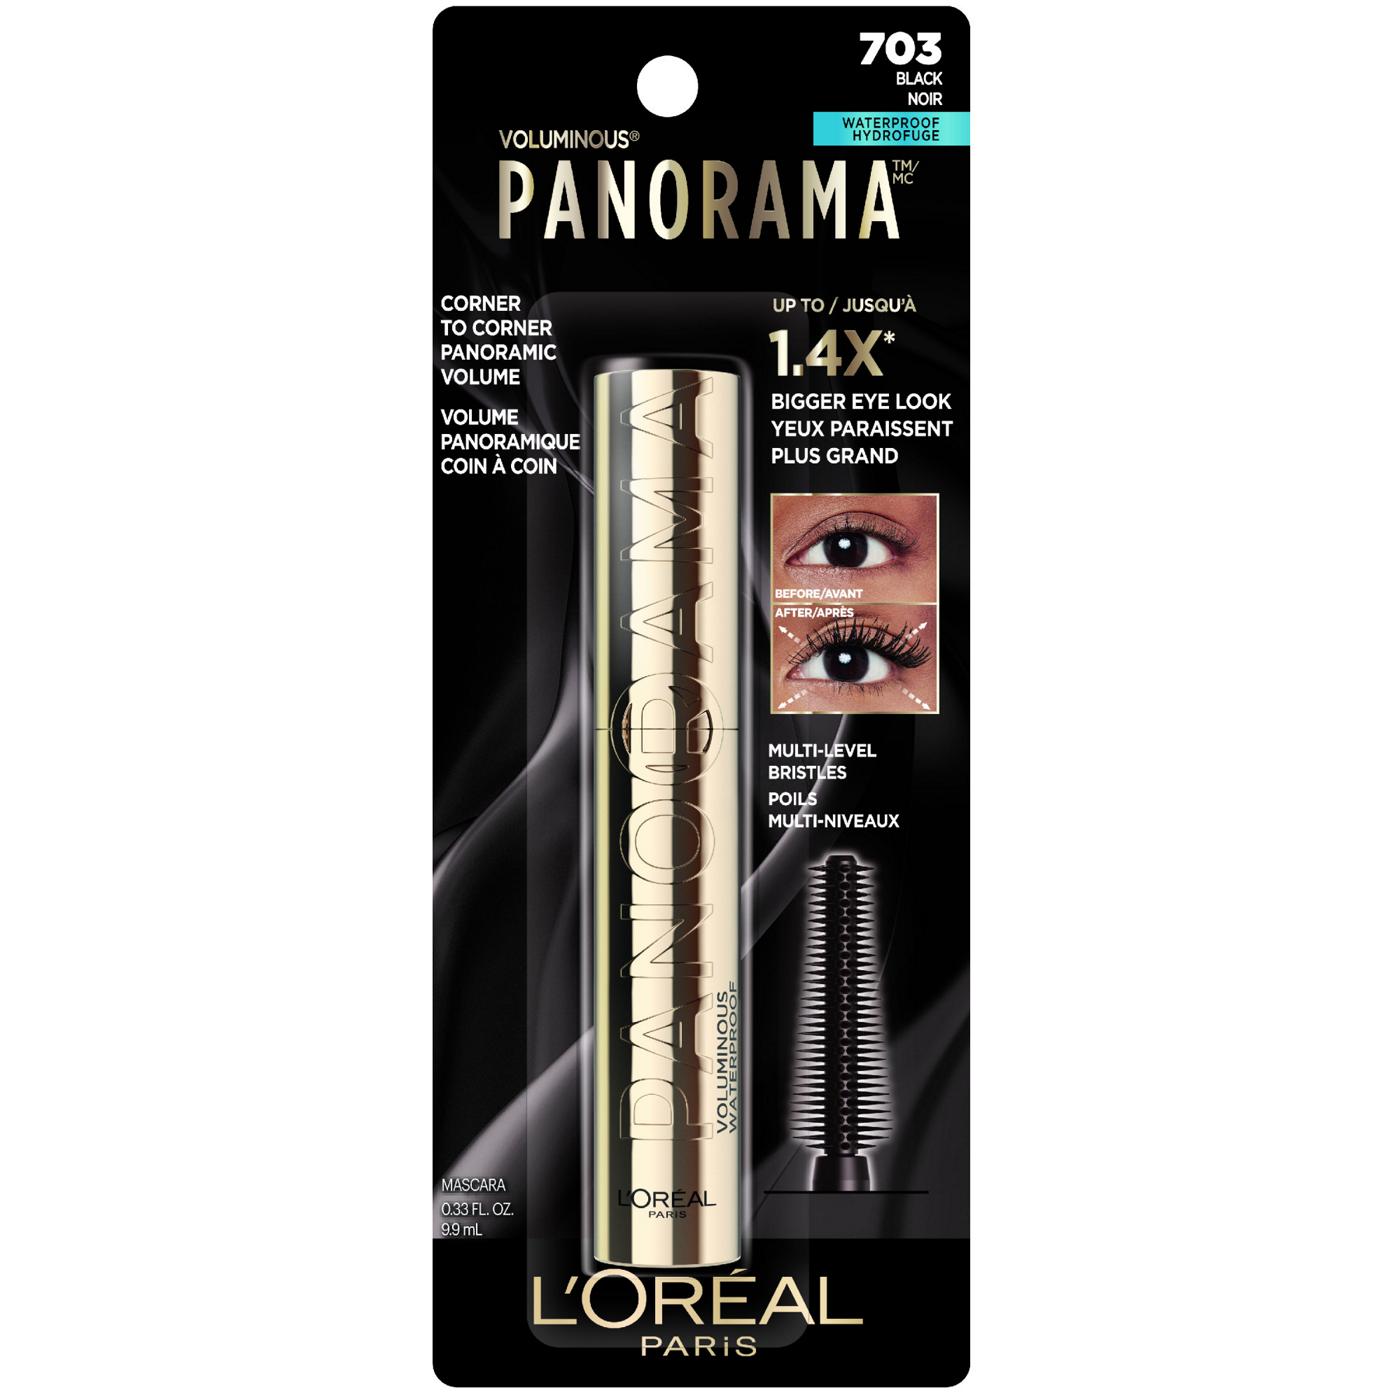 L'Oréal Paris Voluminous Panorama Mascara, Waterproof. Volumizing Black; image 1 of 6